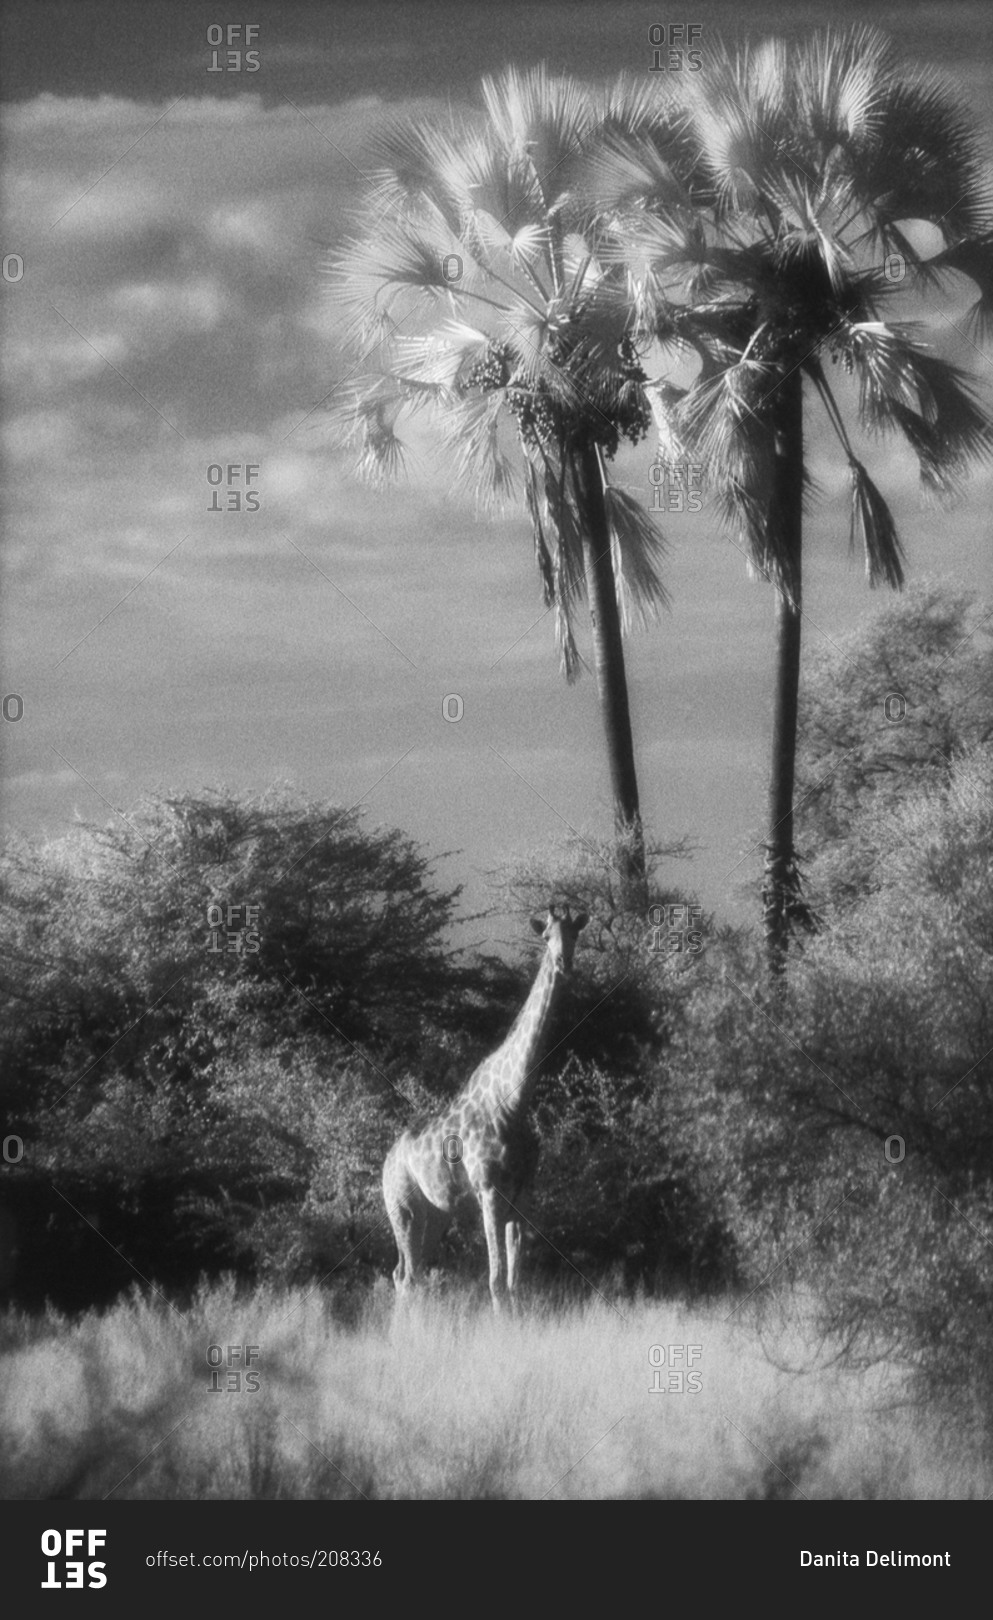 Giraffe at a cabbage palm in Botswana, Africa